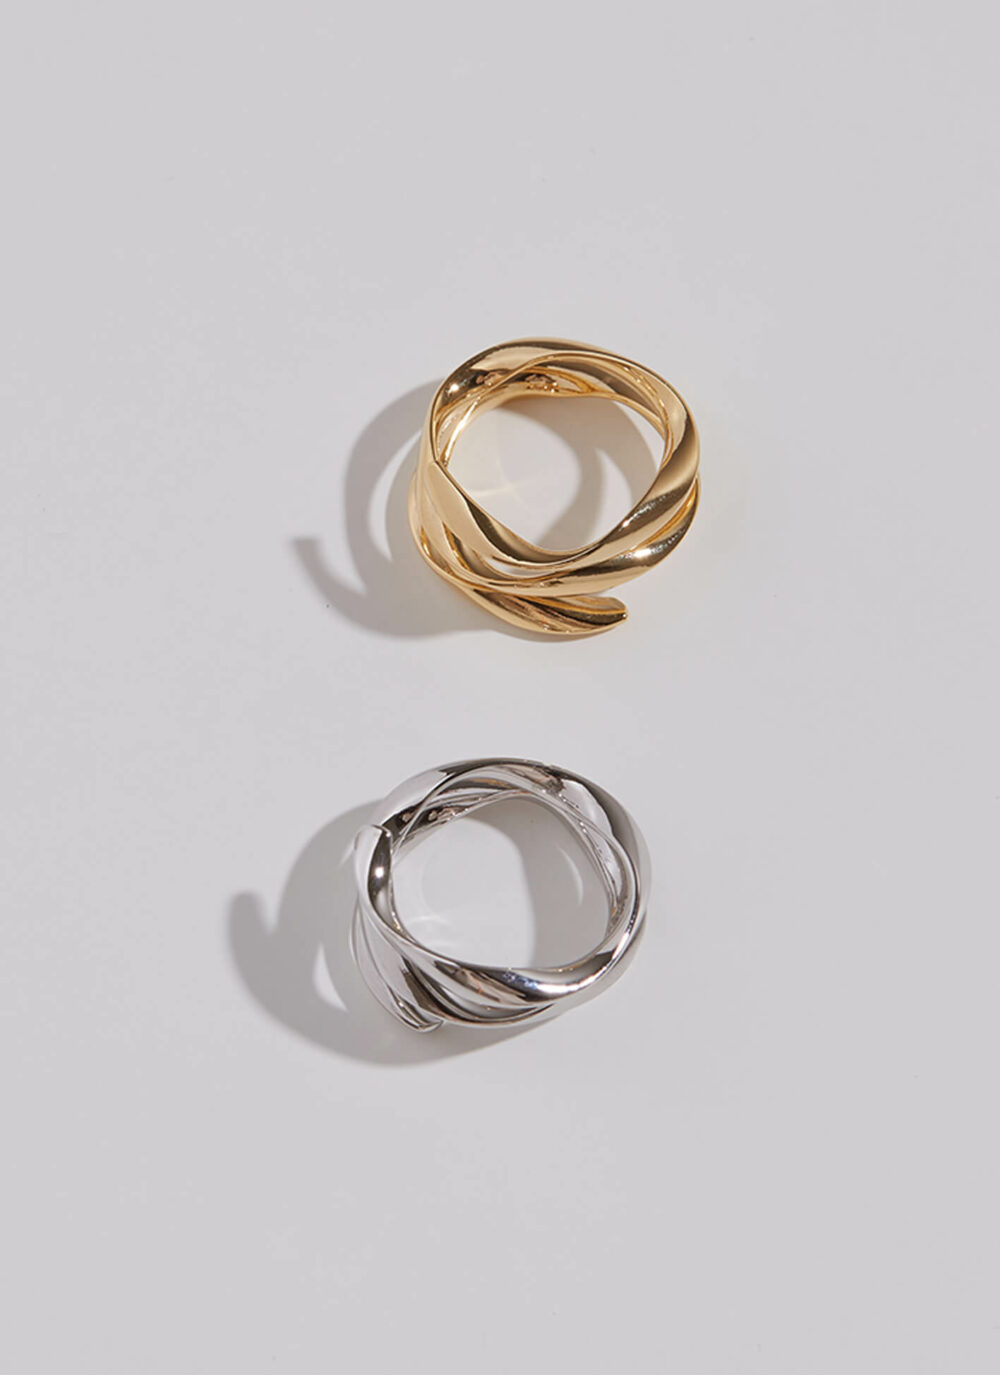 Eco安珂,韓國飾品,韓國戒指,多圈戒指,寬版戒指,開口戒指,個性戒指